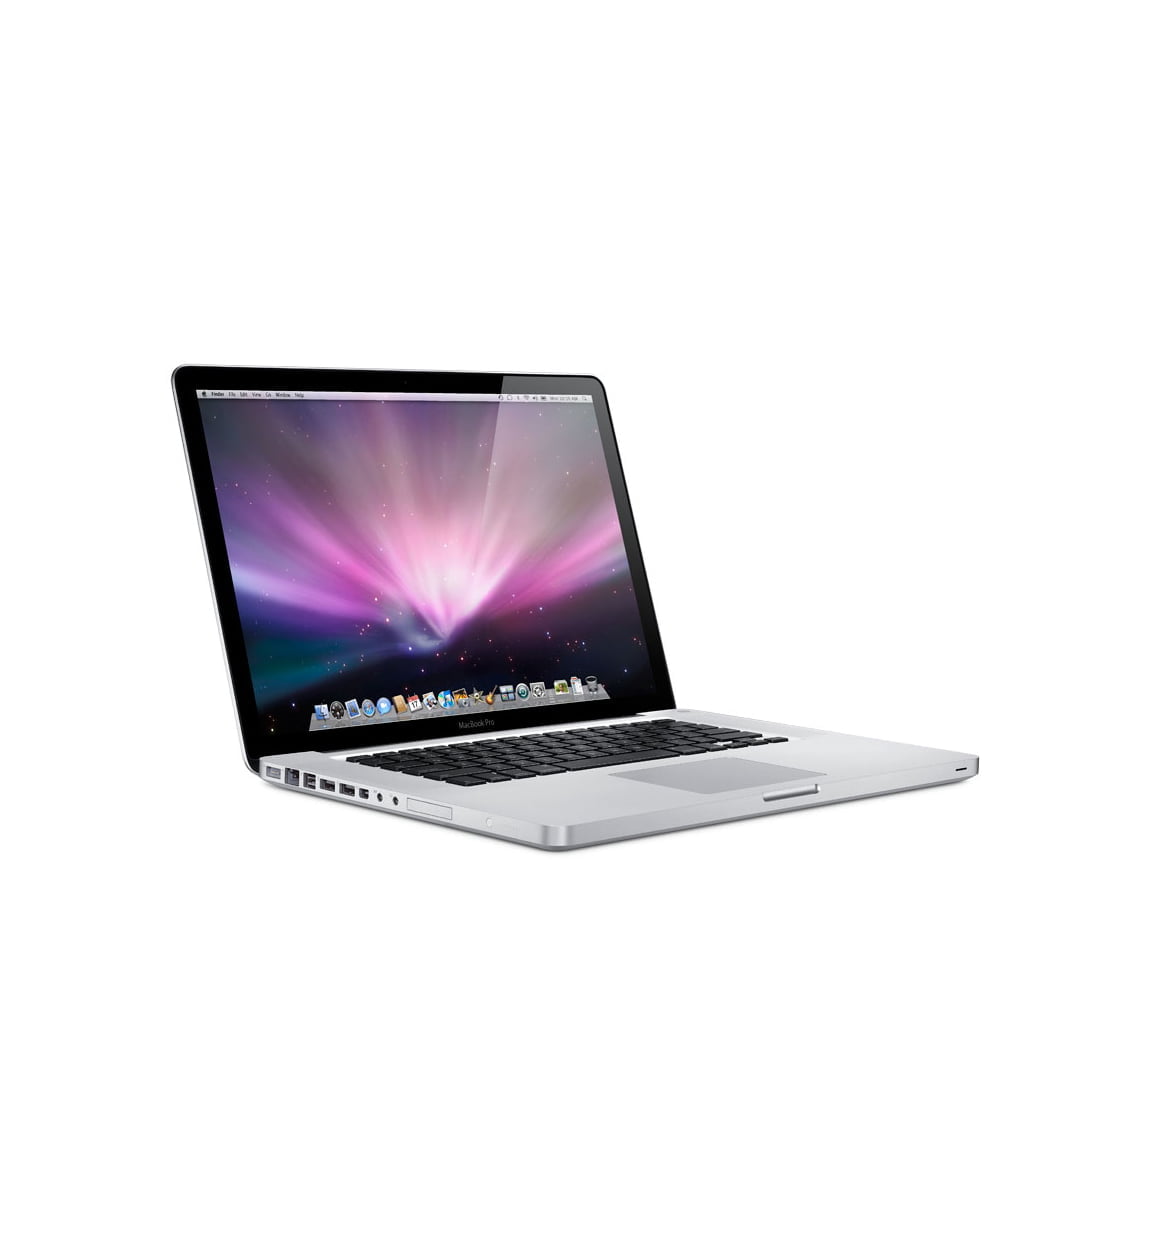 15 inch Macbook Pro Hire Melbourne Sydney 04